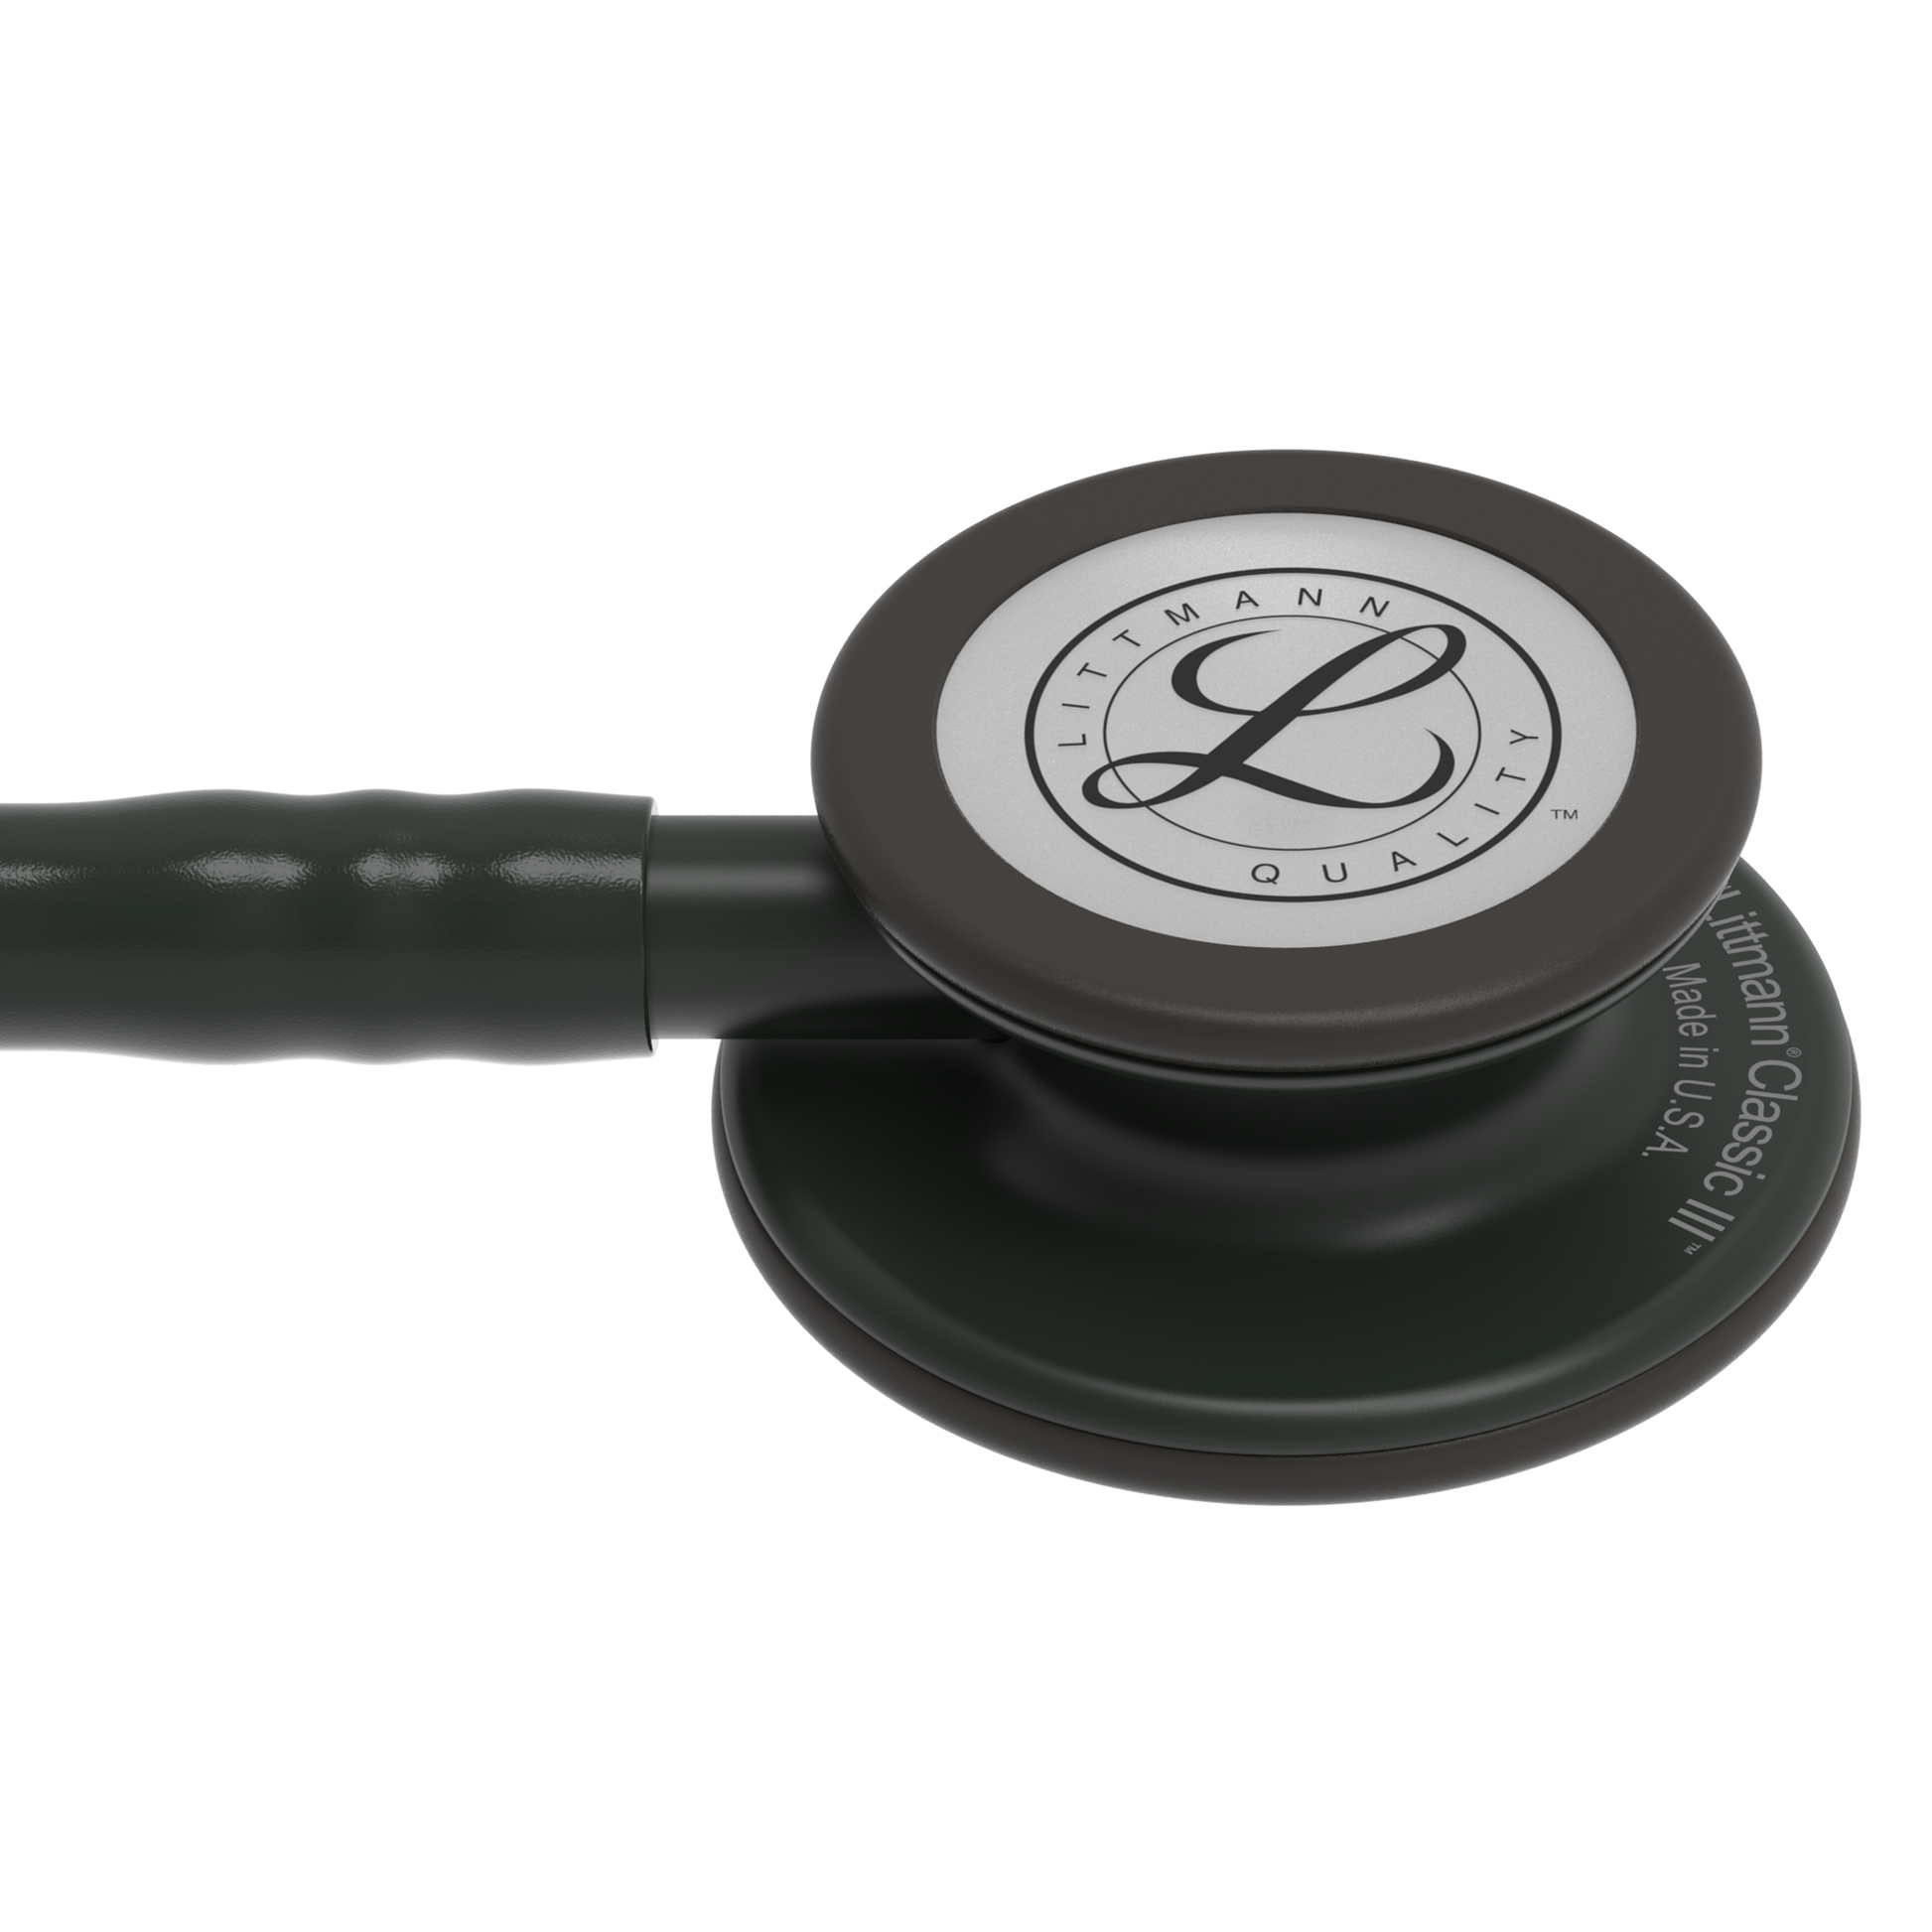 Littmann Classic III Stethoscope: All Black 5803 3M Littmann